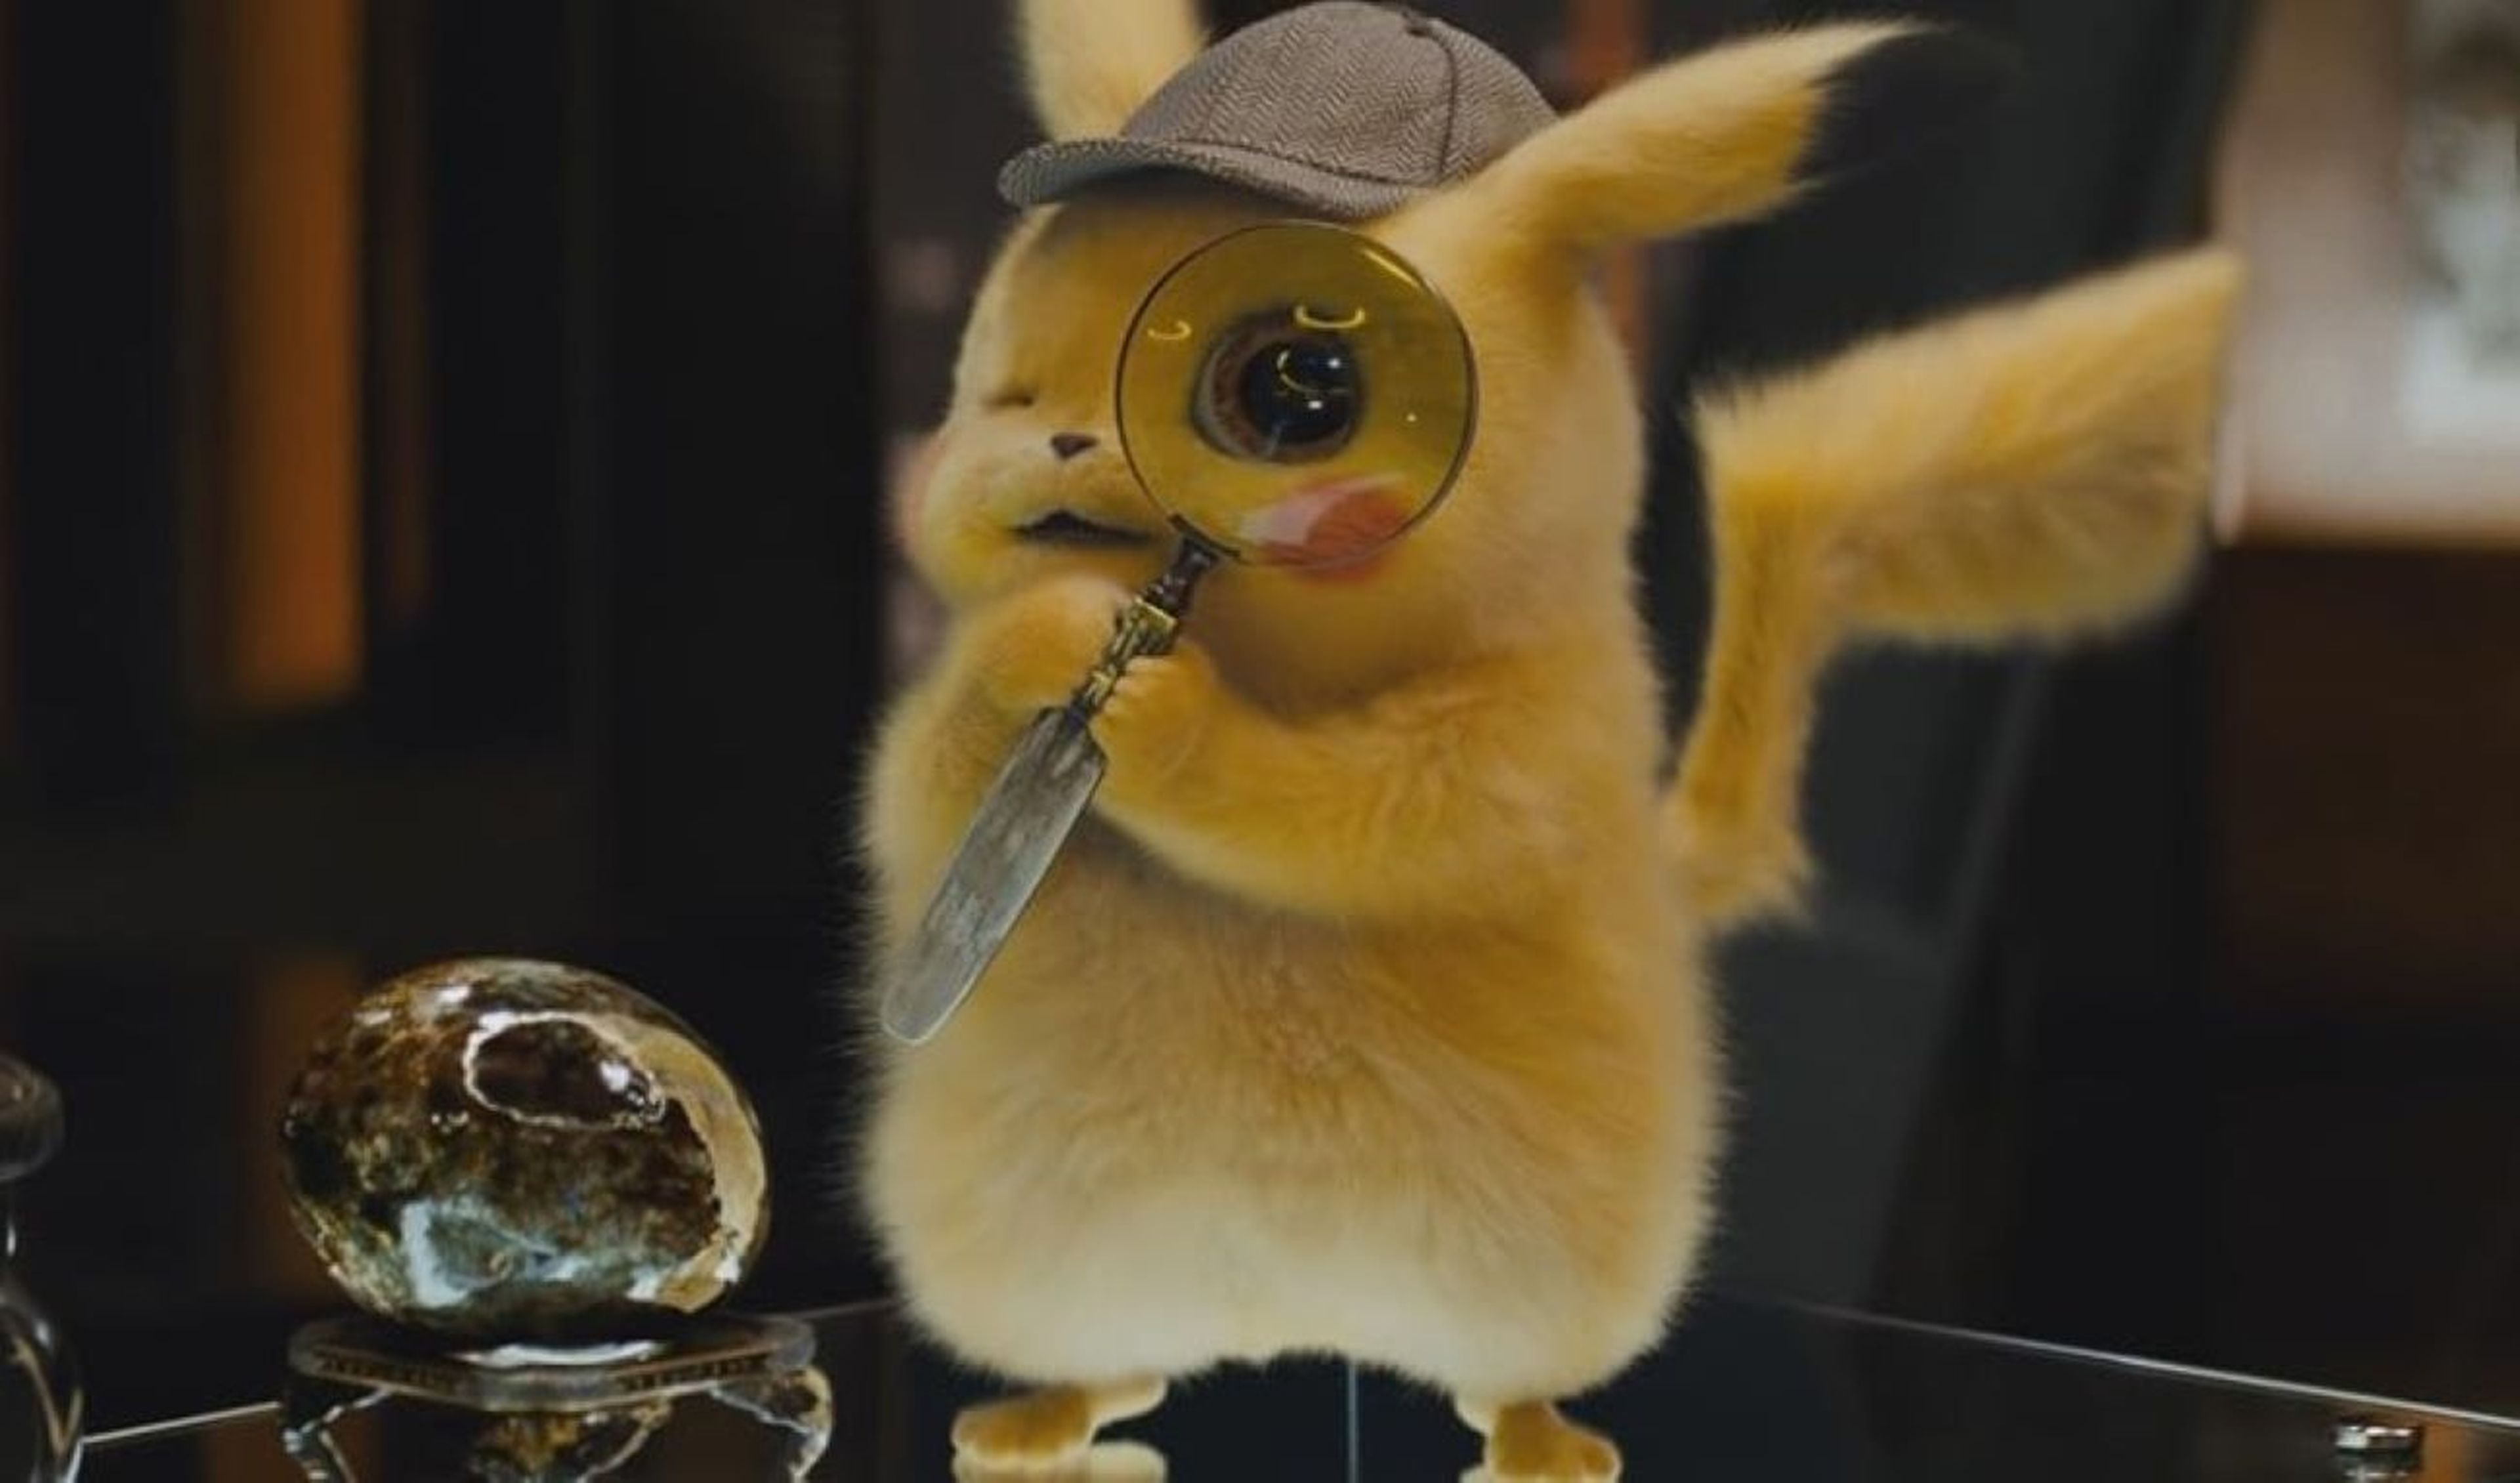 Pikachu detective